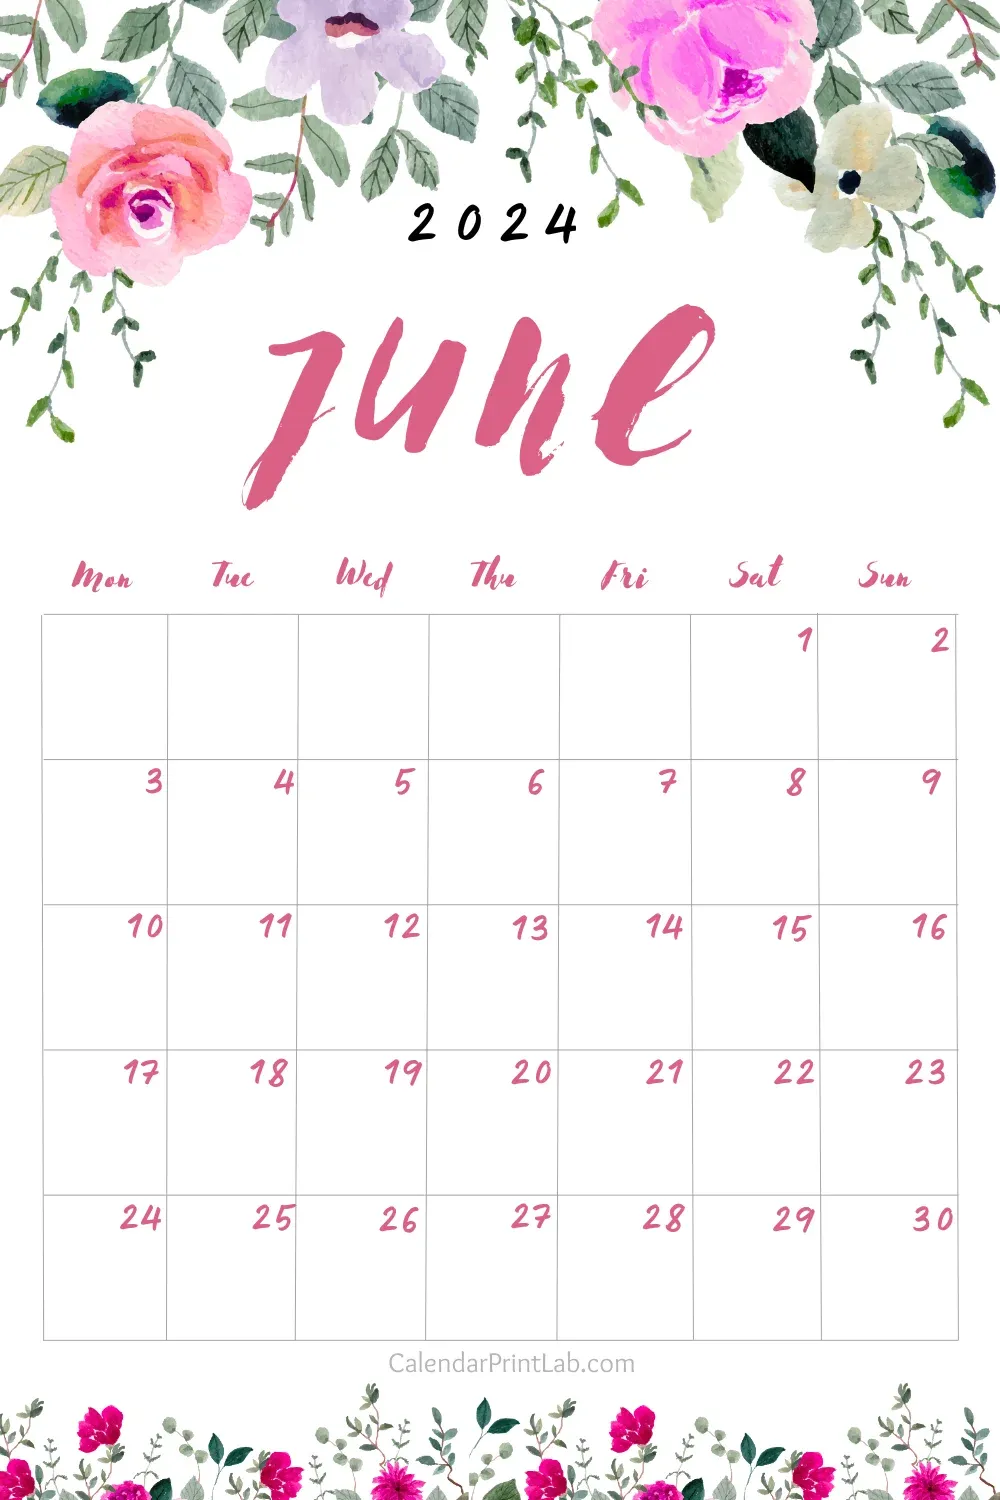 2024 June Floral Calendar for Walls